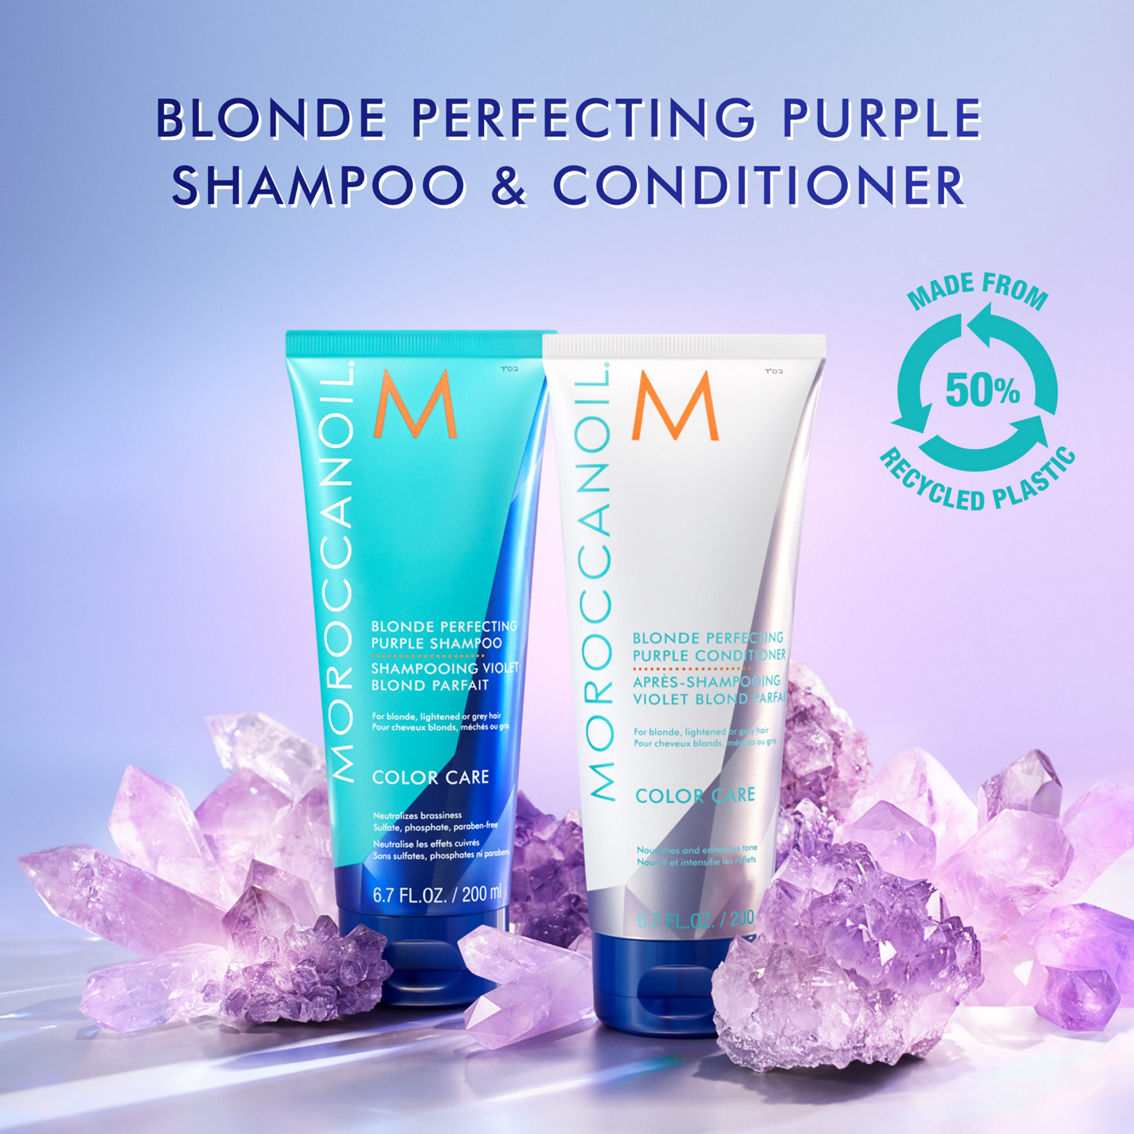 Moroccanoil Blonde Perfecting Purple Conditioner 6.7 oz. - Image 4 of 4